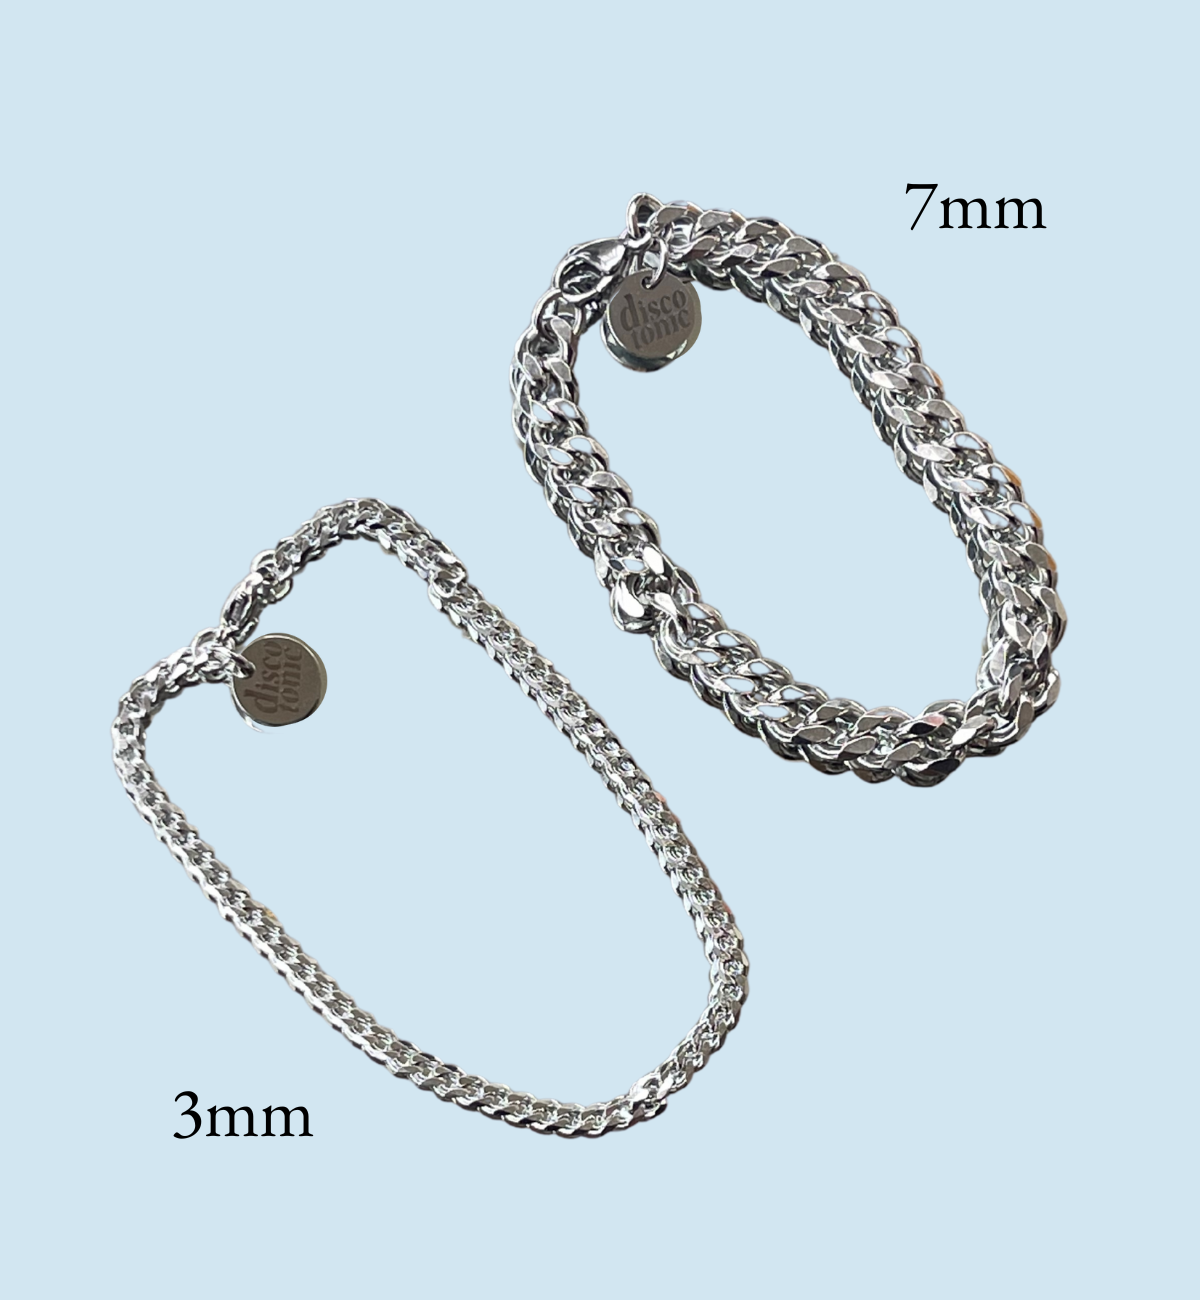 'plain jane' bracelet